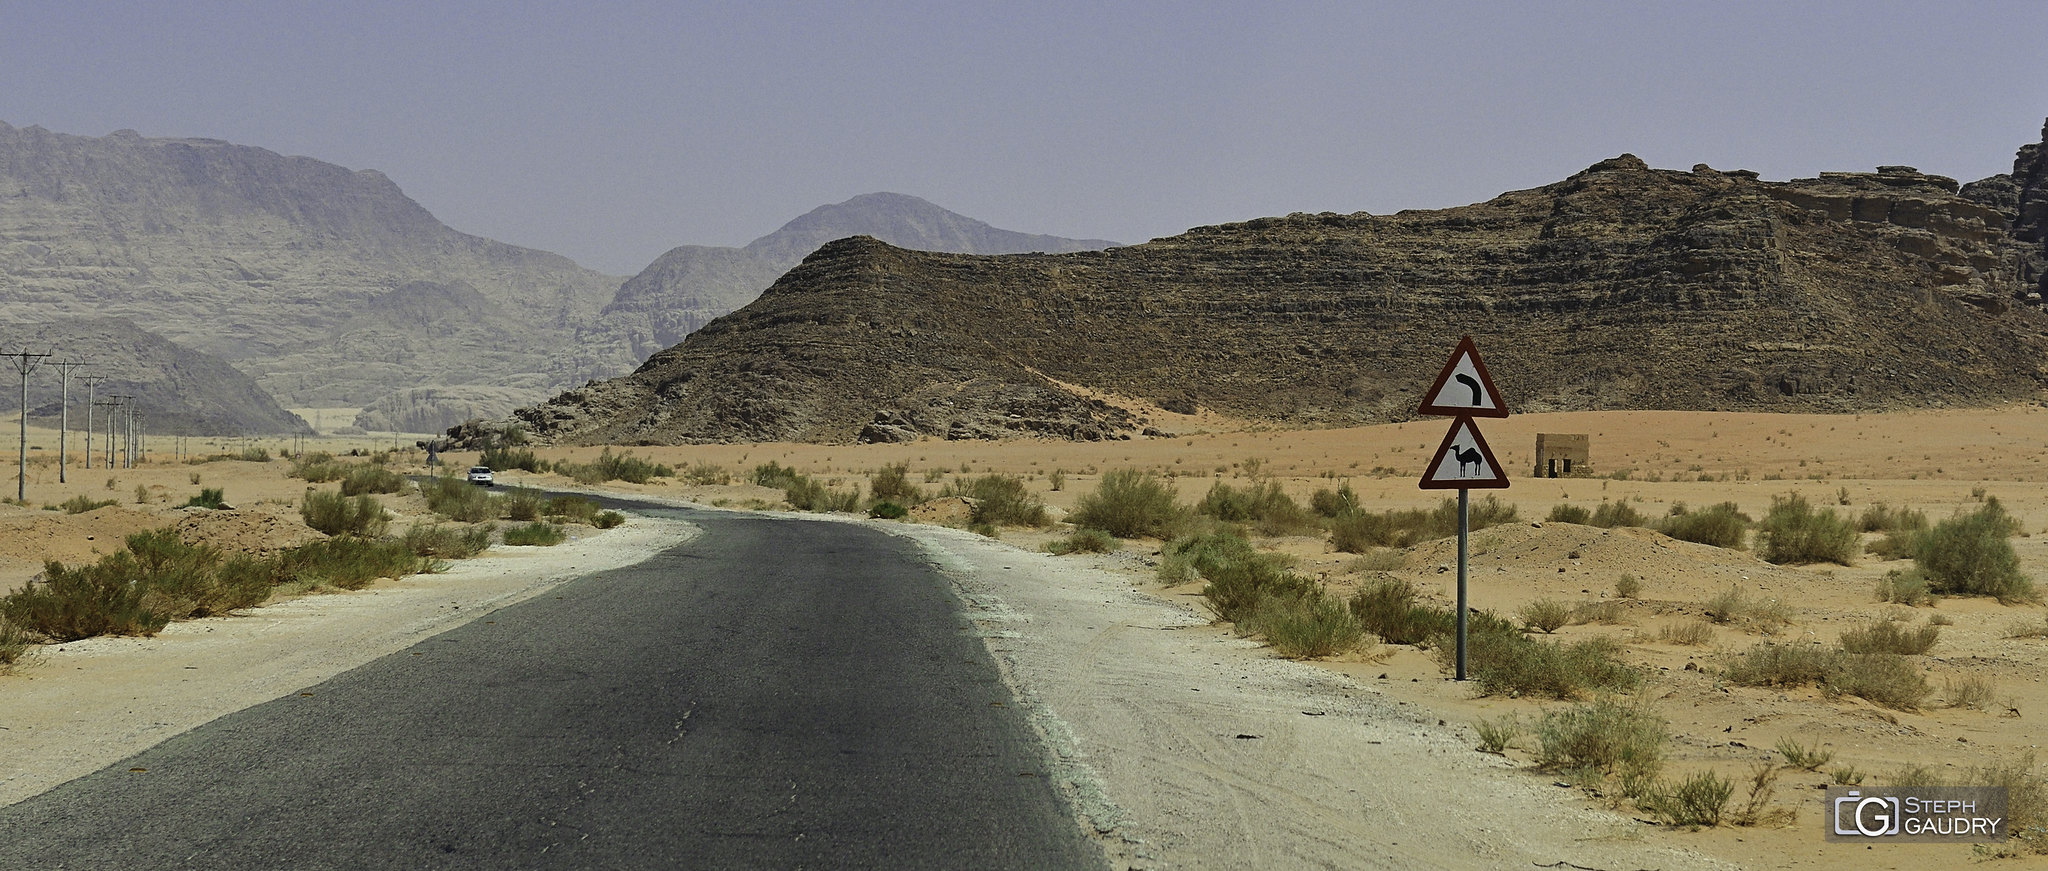 En route vers le Wadi-Rum... [Click to start slideshow]